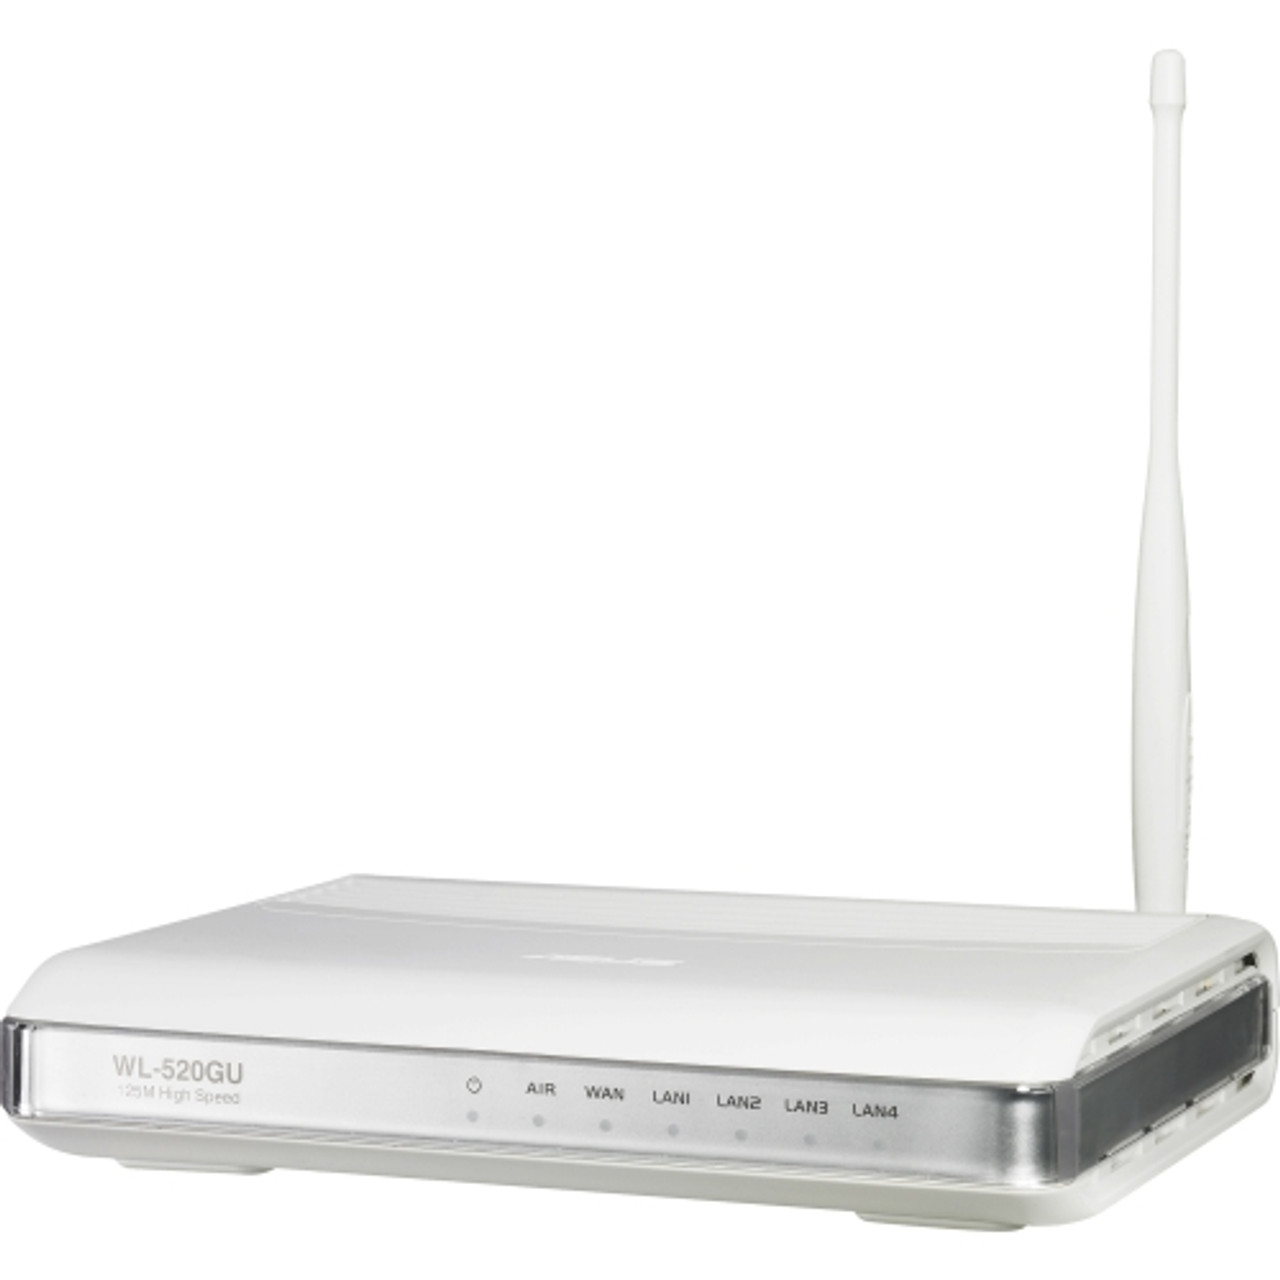 Q41903 Asus WL-520gU IEEE 802.11b/g Wireless Router (Refurbished)